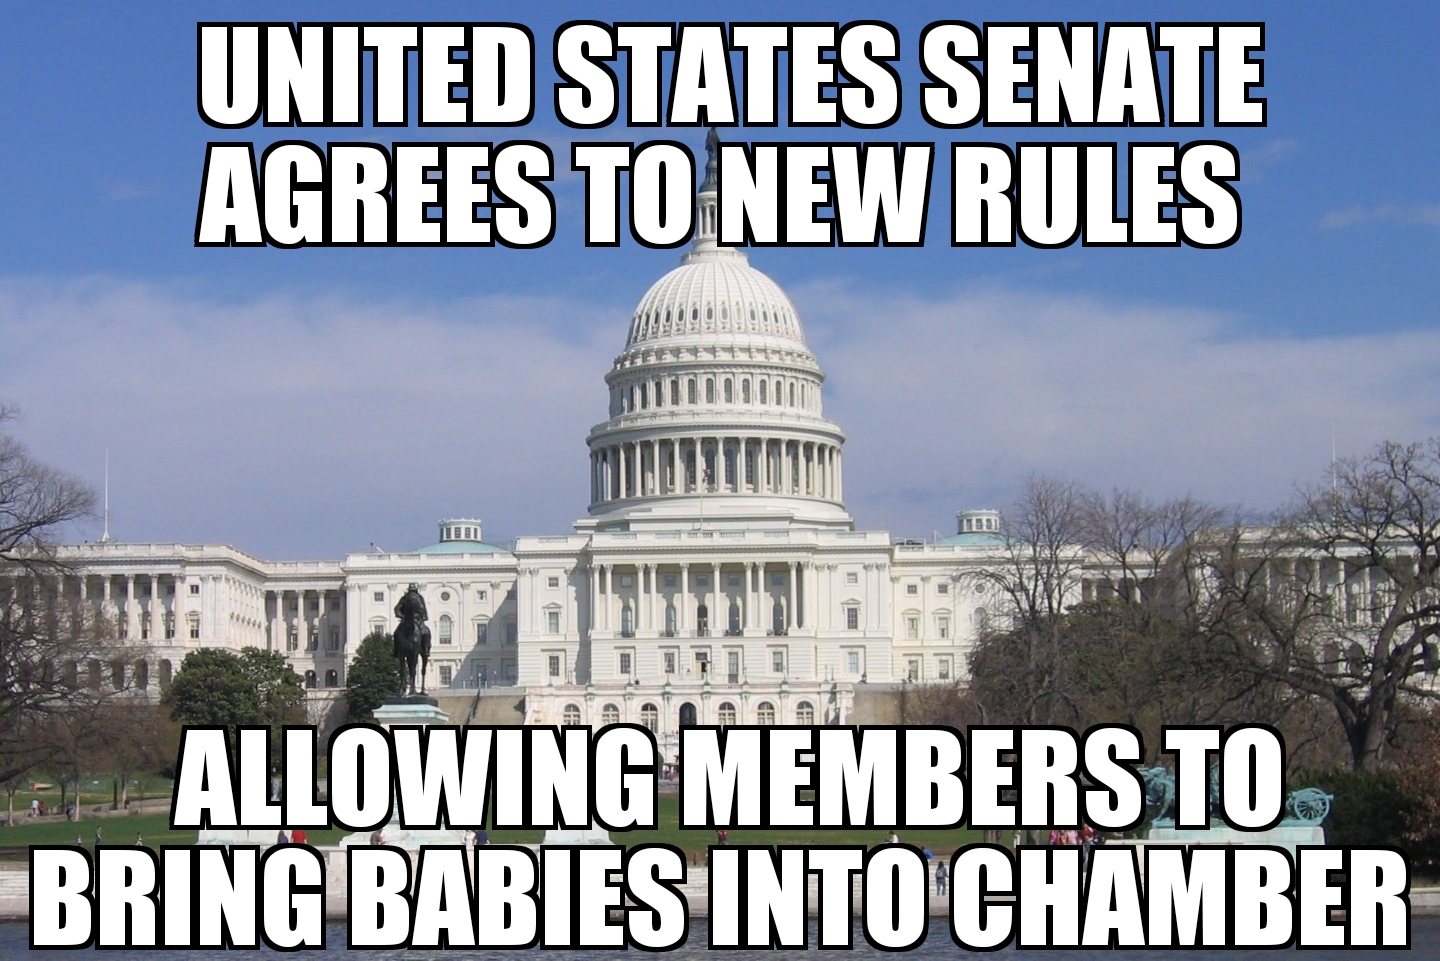 U.S. senators allowed to bring babies into chamber